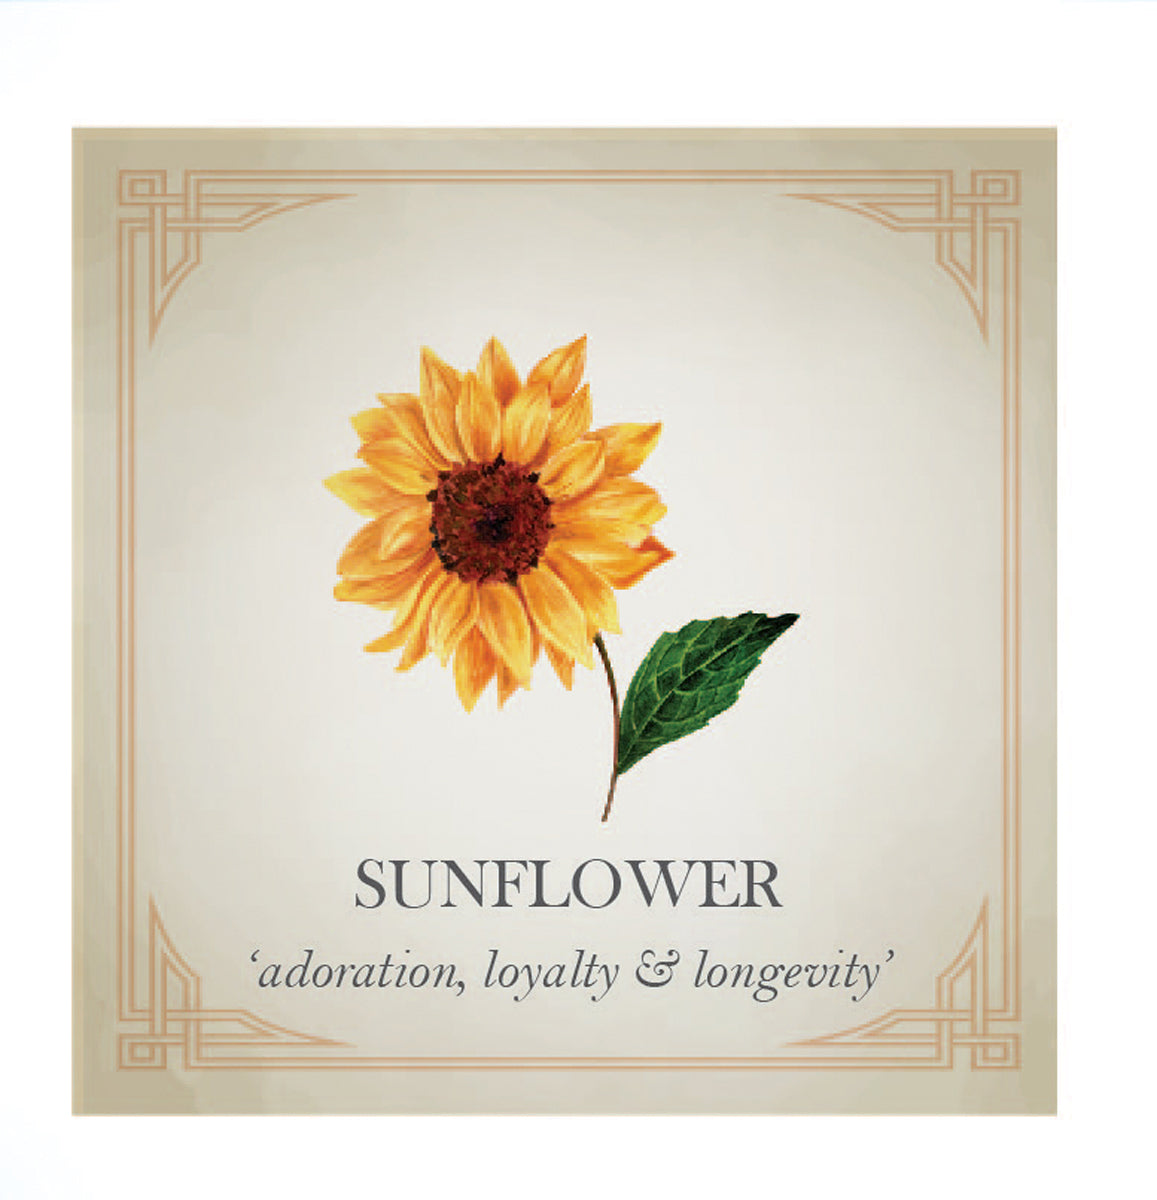 Sunflower Silver Charm Bracelet